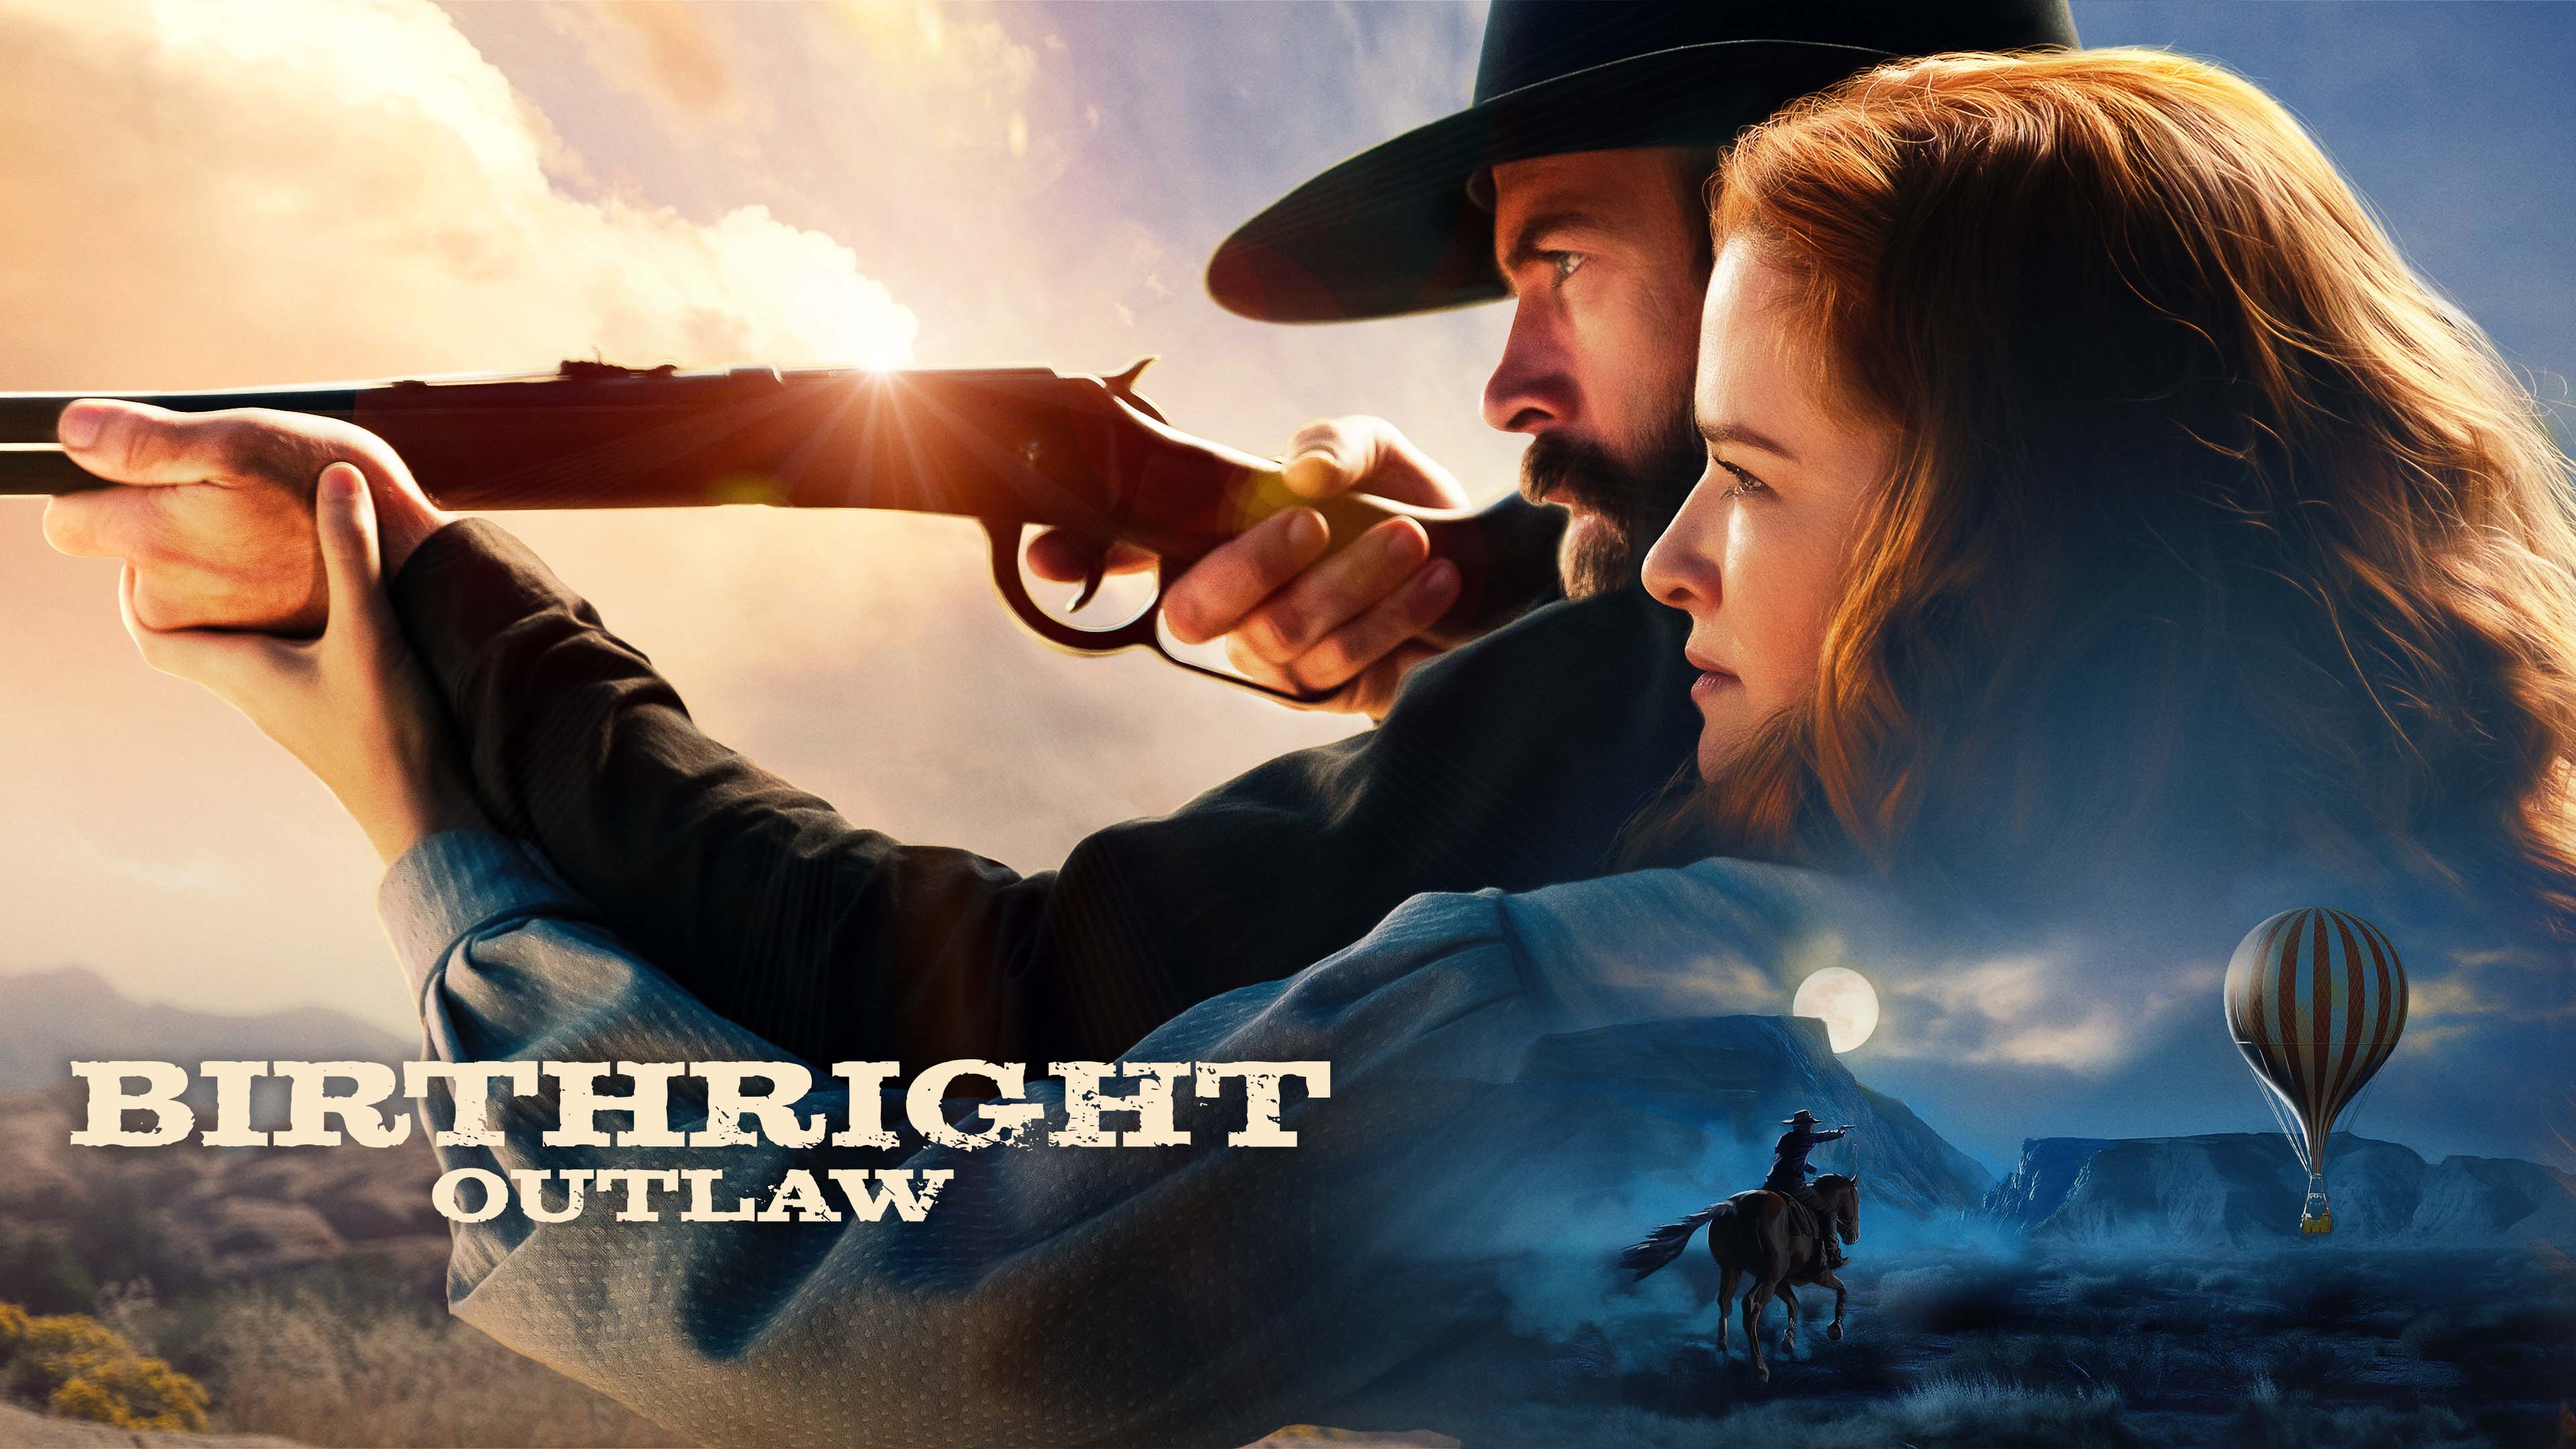 Watch Birthright Outlaw Movie Online